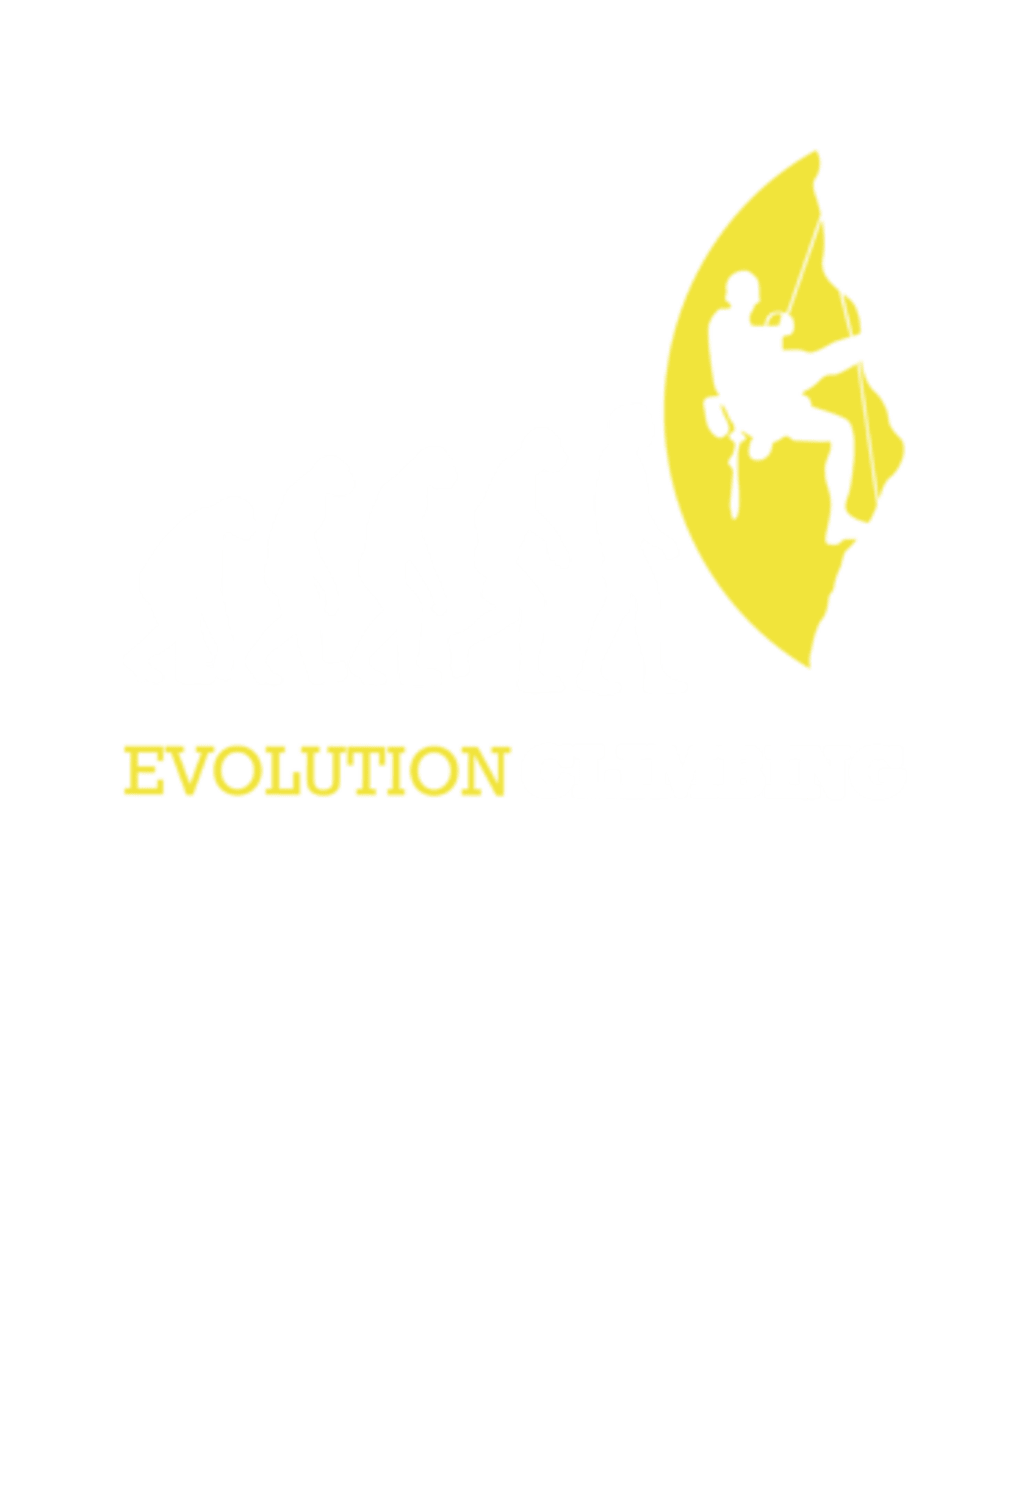 Evolution Climbing